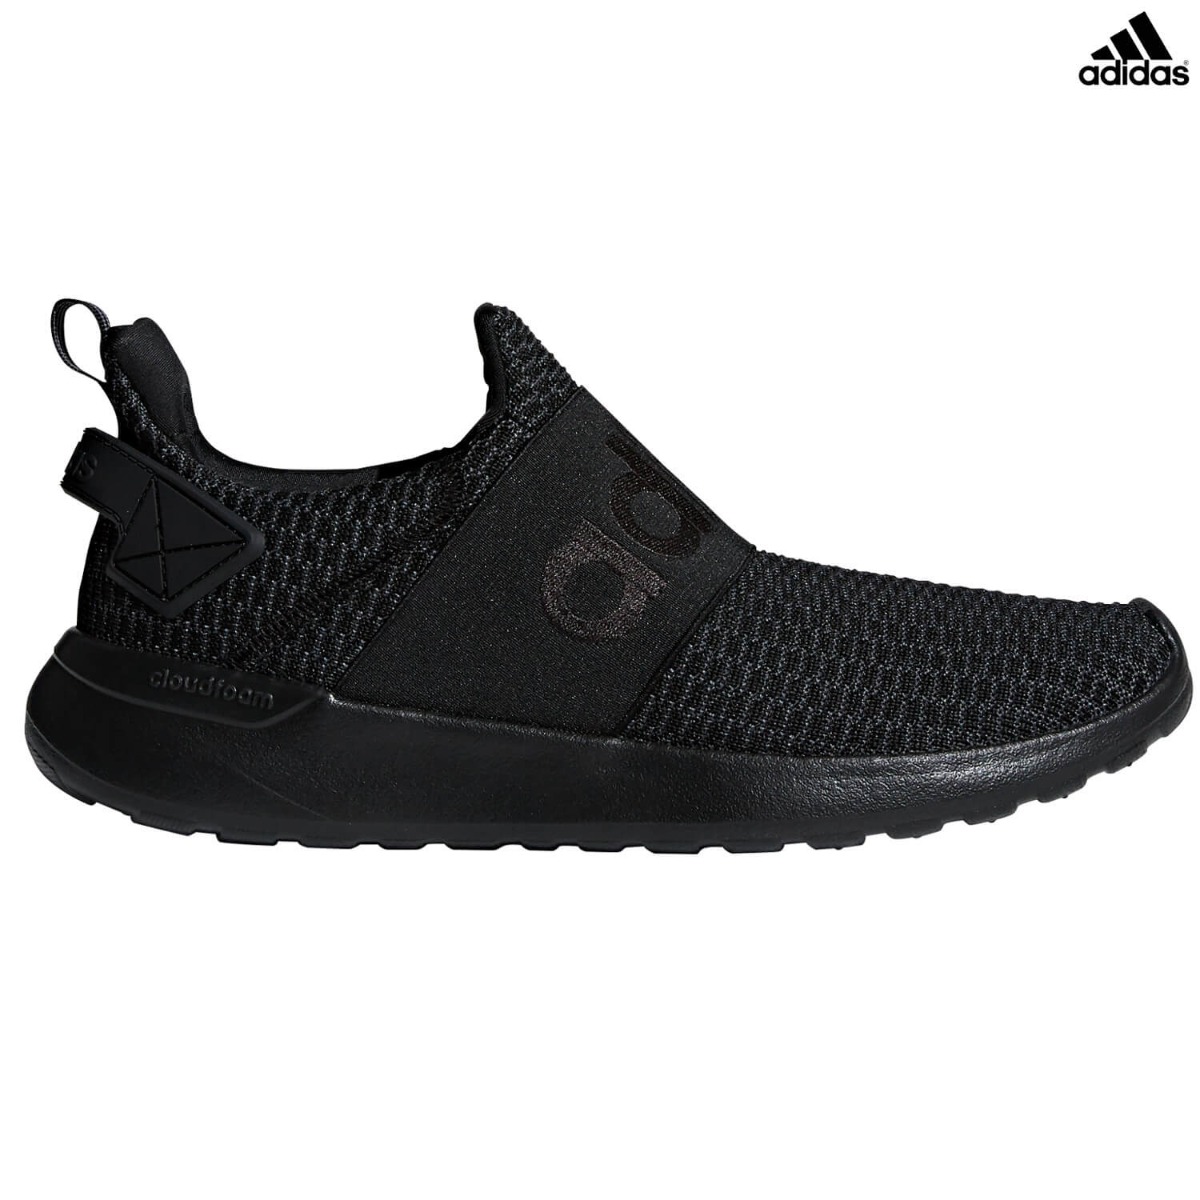 adidas Lite Racer Adapt Shoes, black